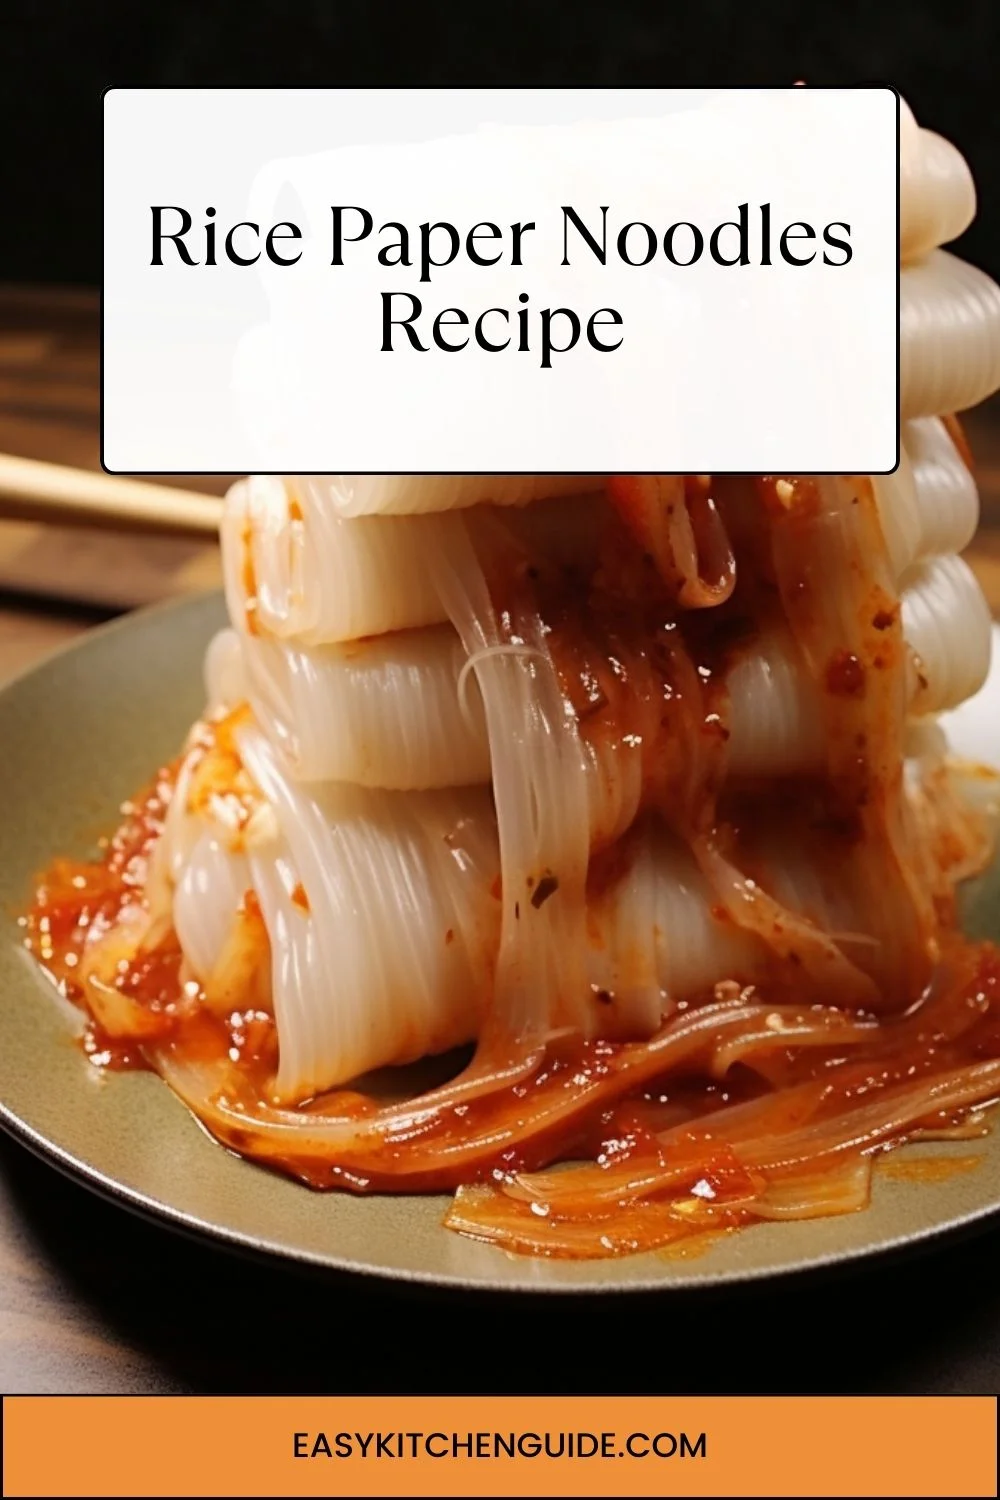 Rice Paper Noodles Recipe